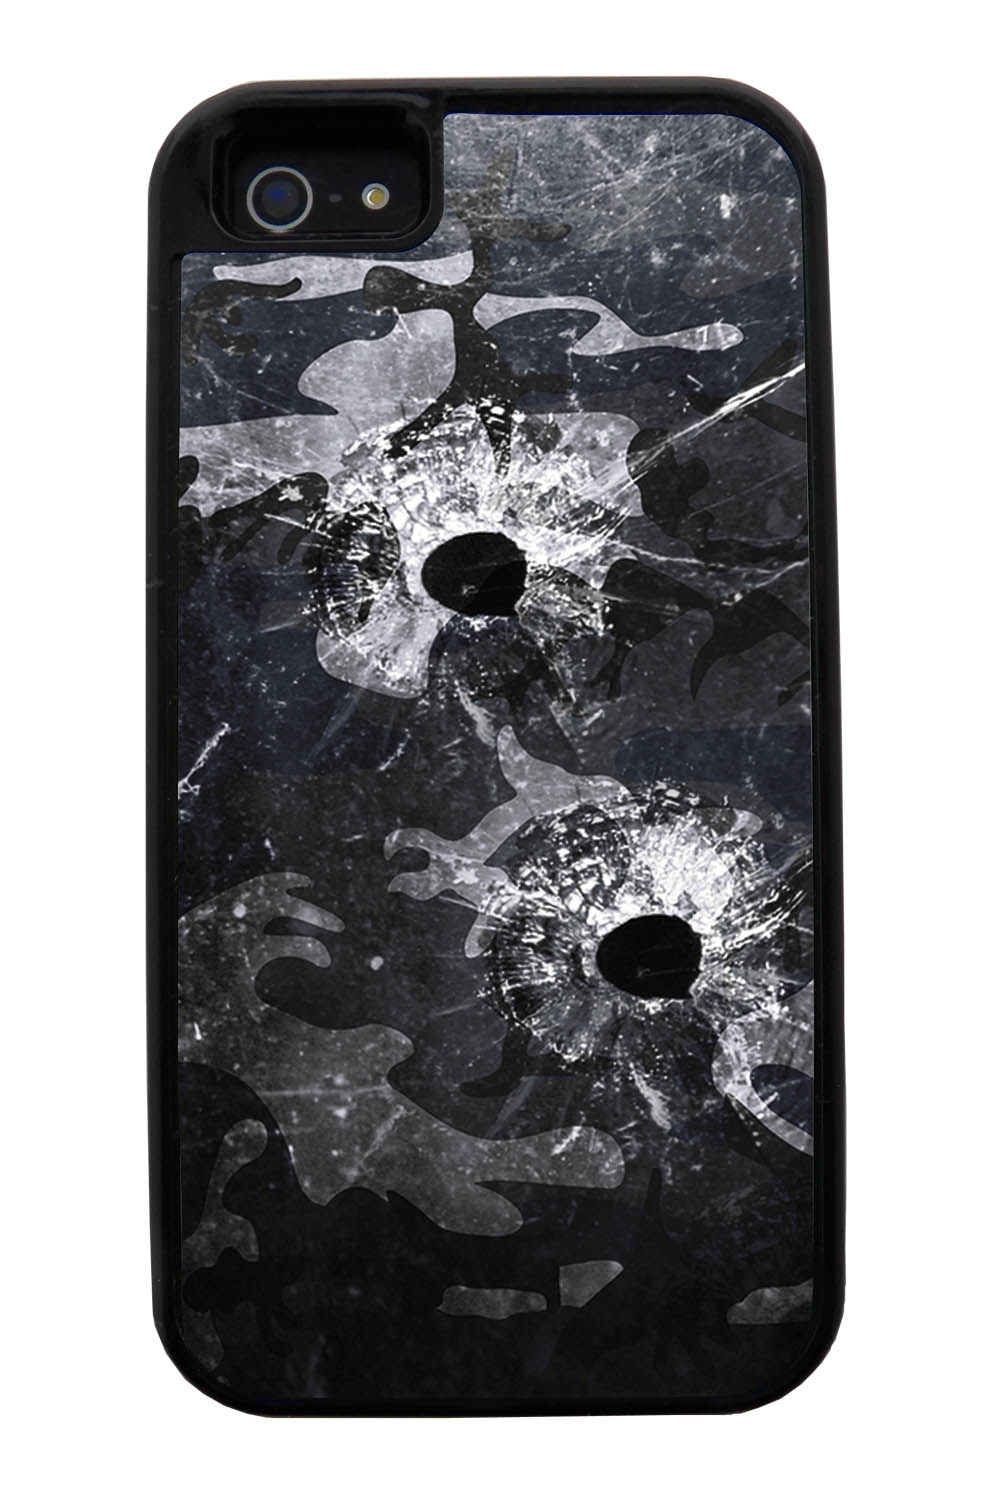 Apple iPhone 5 / 5S Camo Case - Glass Bullet Ridden Urban Colors - Woodland - Black Tough Hybrid Case